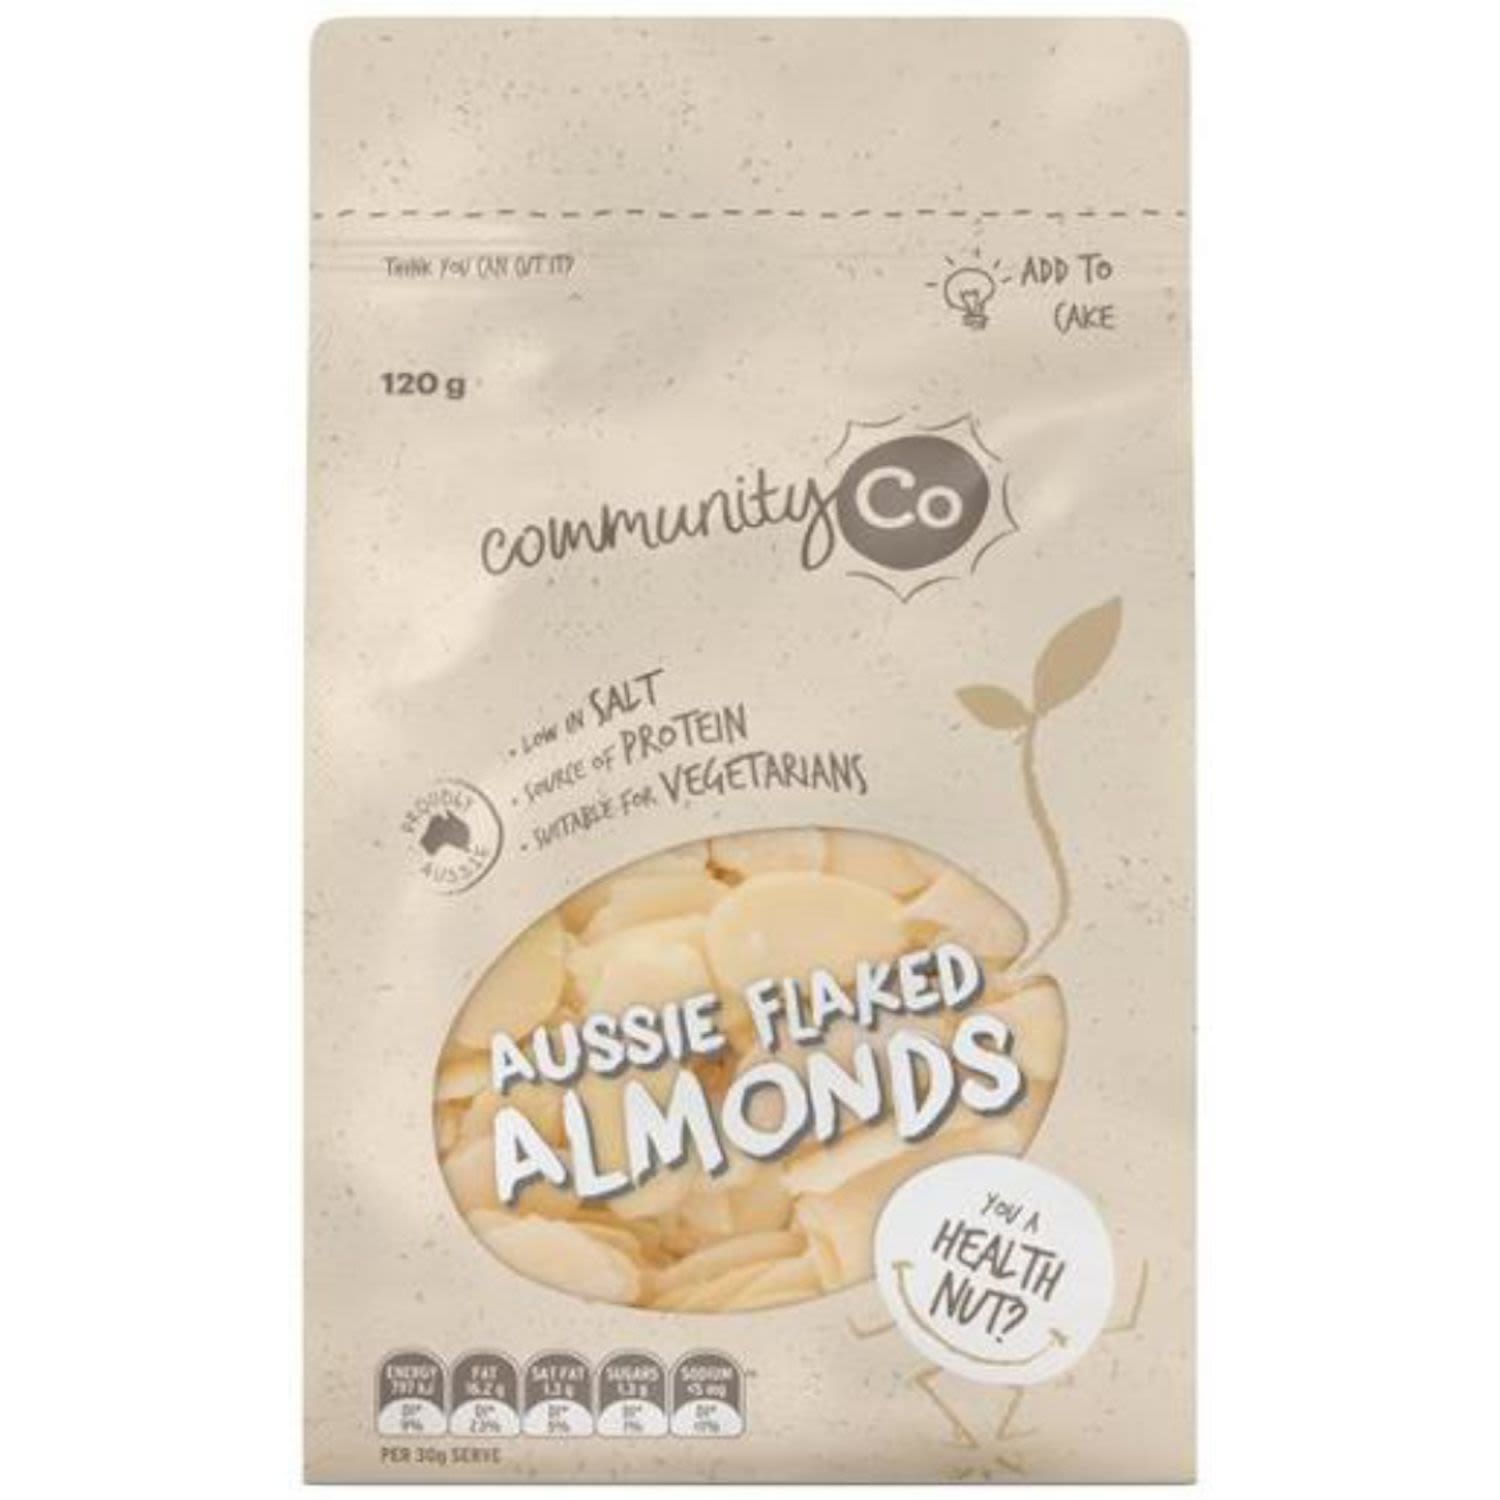 Community Co Almond Flaked, 120 Gram